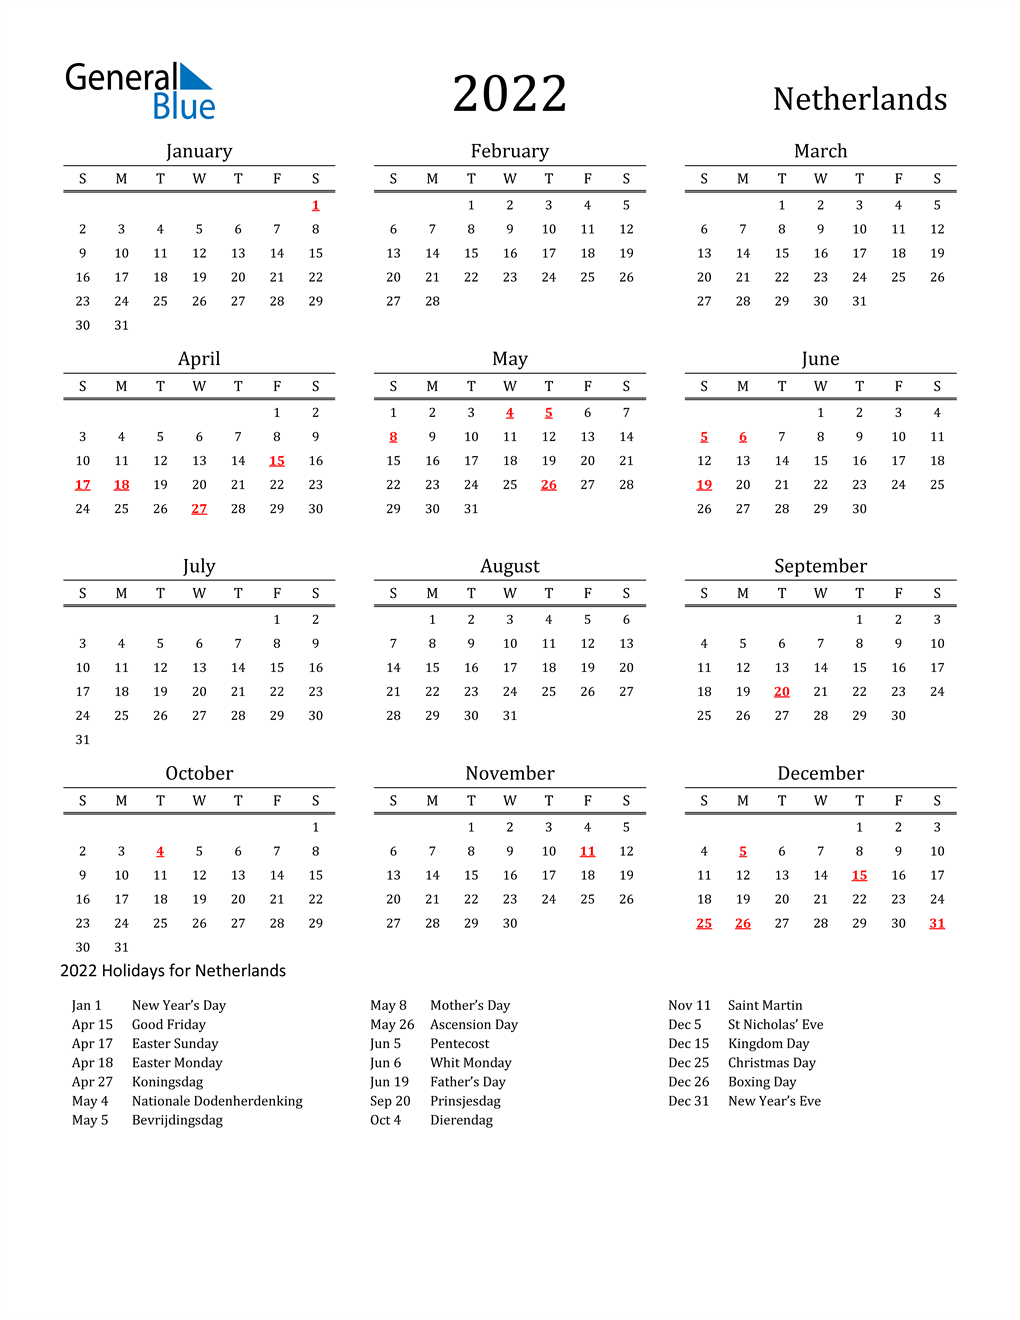 2022 Netherlands Calendar With Holidays